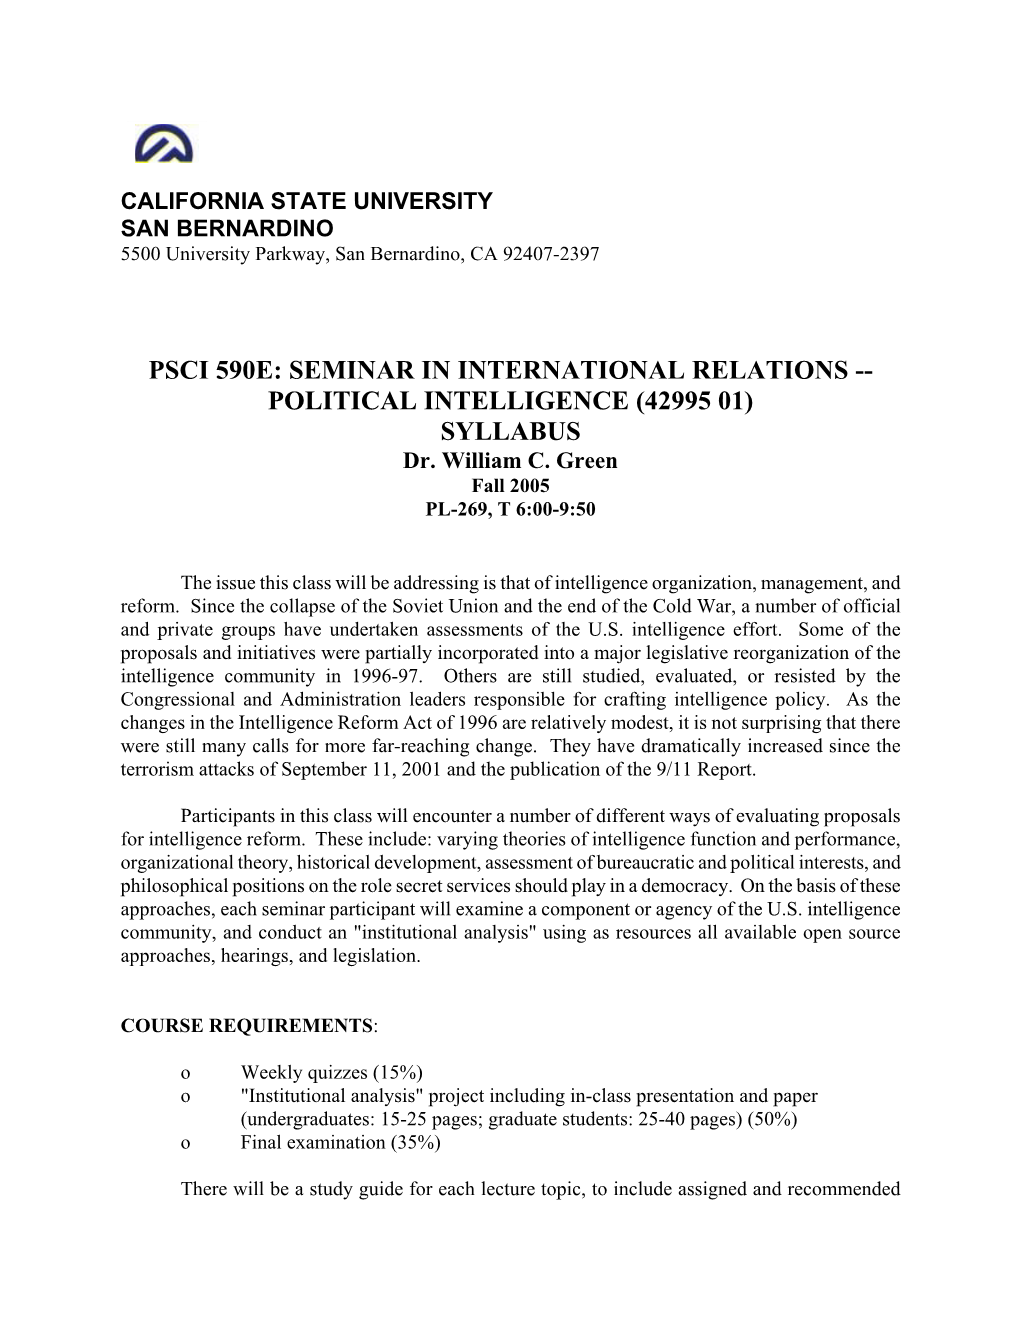 PSCI 590E: SEMINAR in INTERNATIONAL RELATIONS -- POLITICAL INTELLIGENCE (42995 01) SYLLABUS Dr